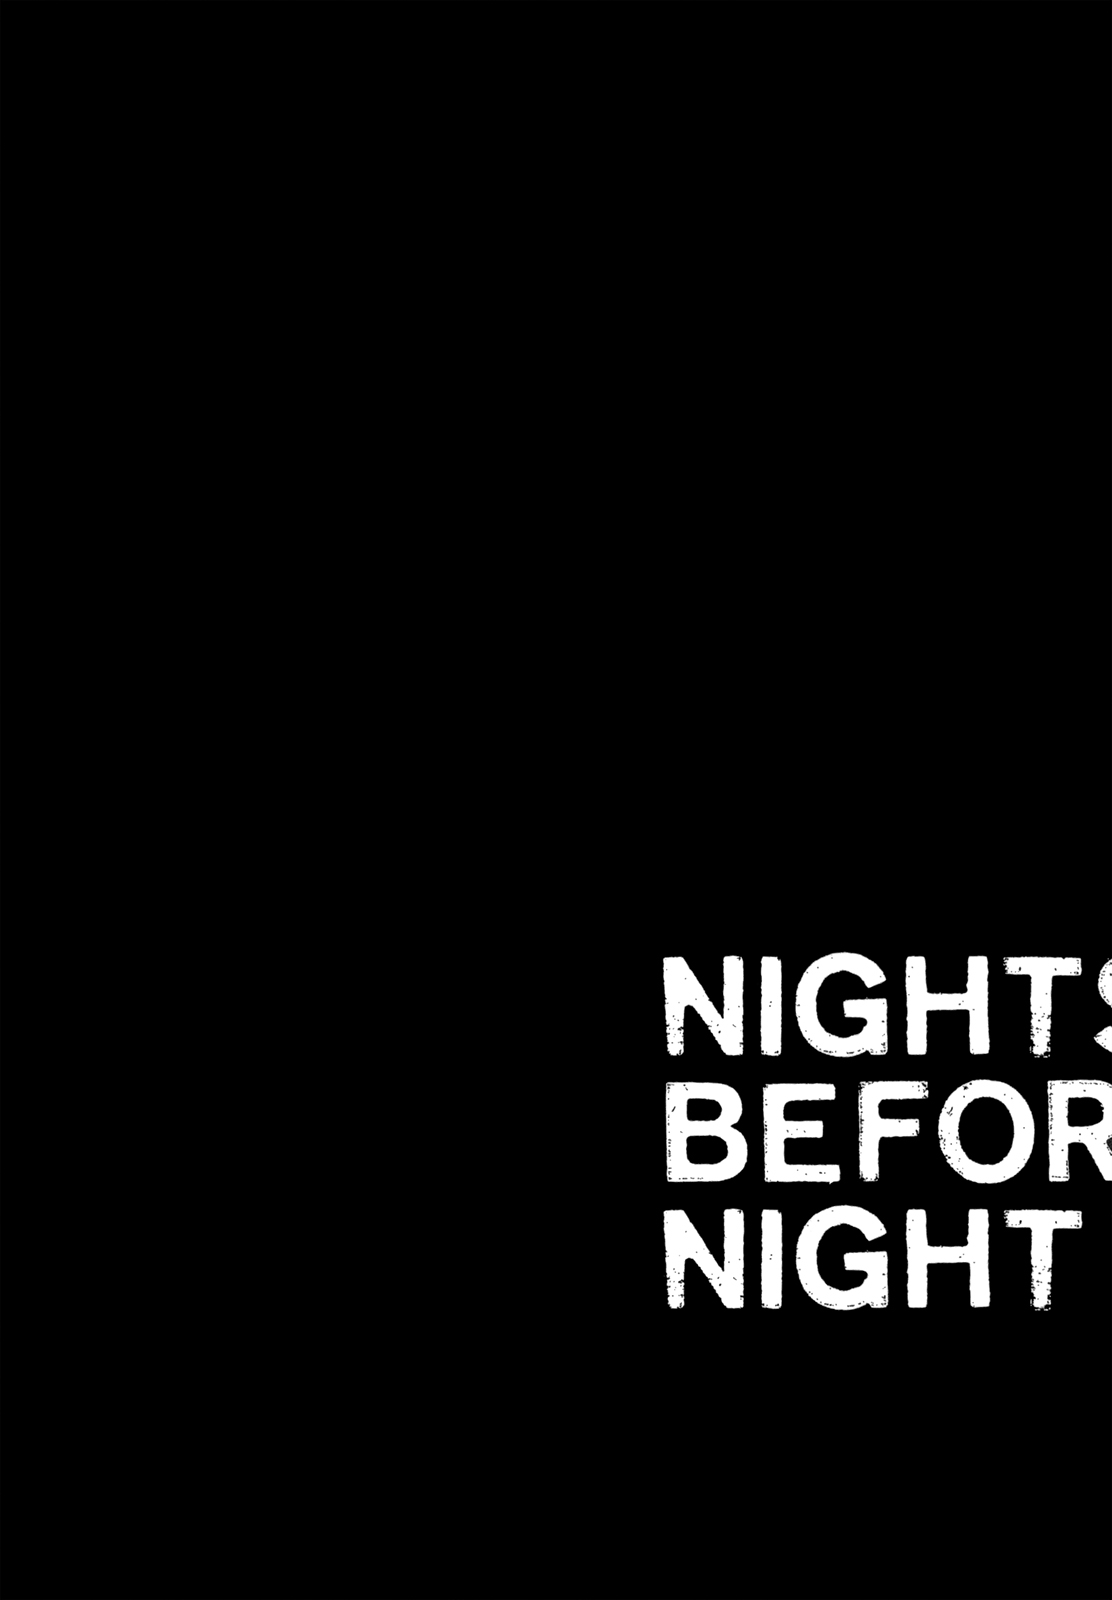 Nights Before Night Ch. 5